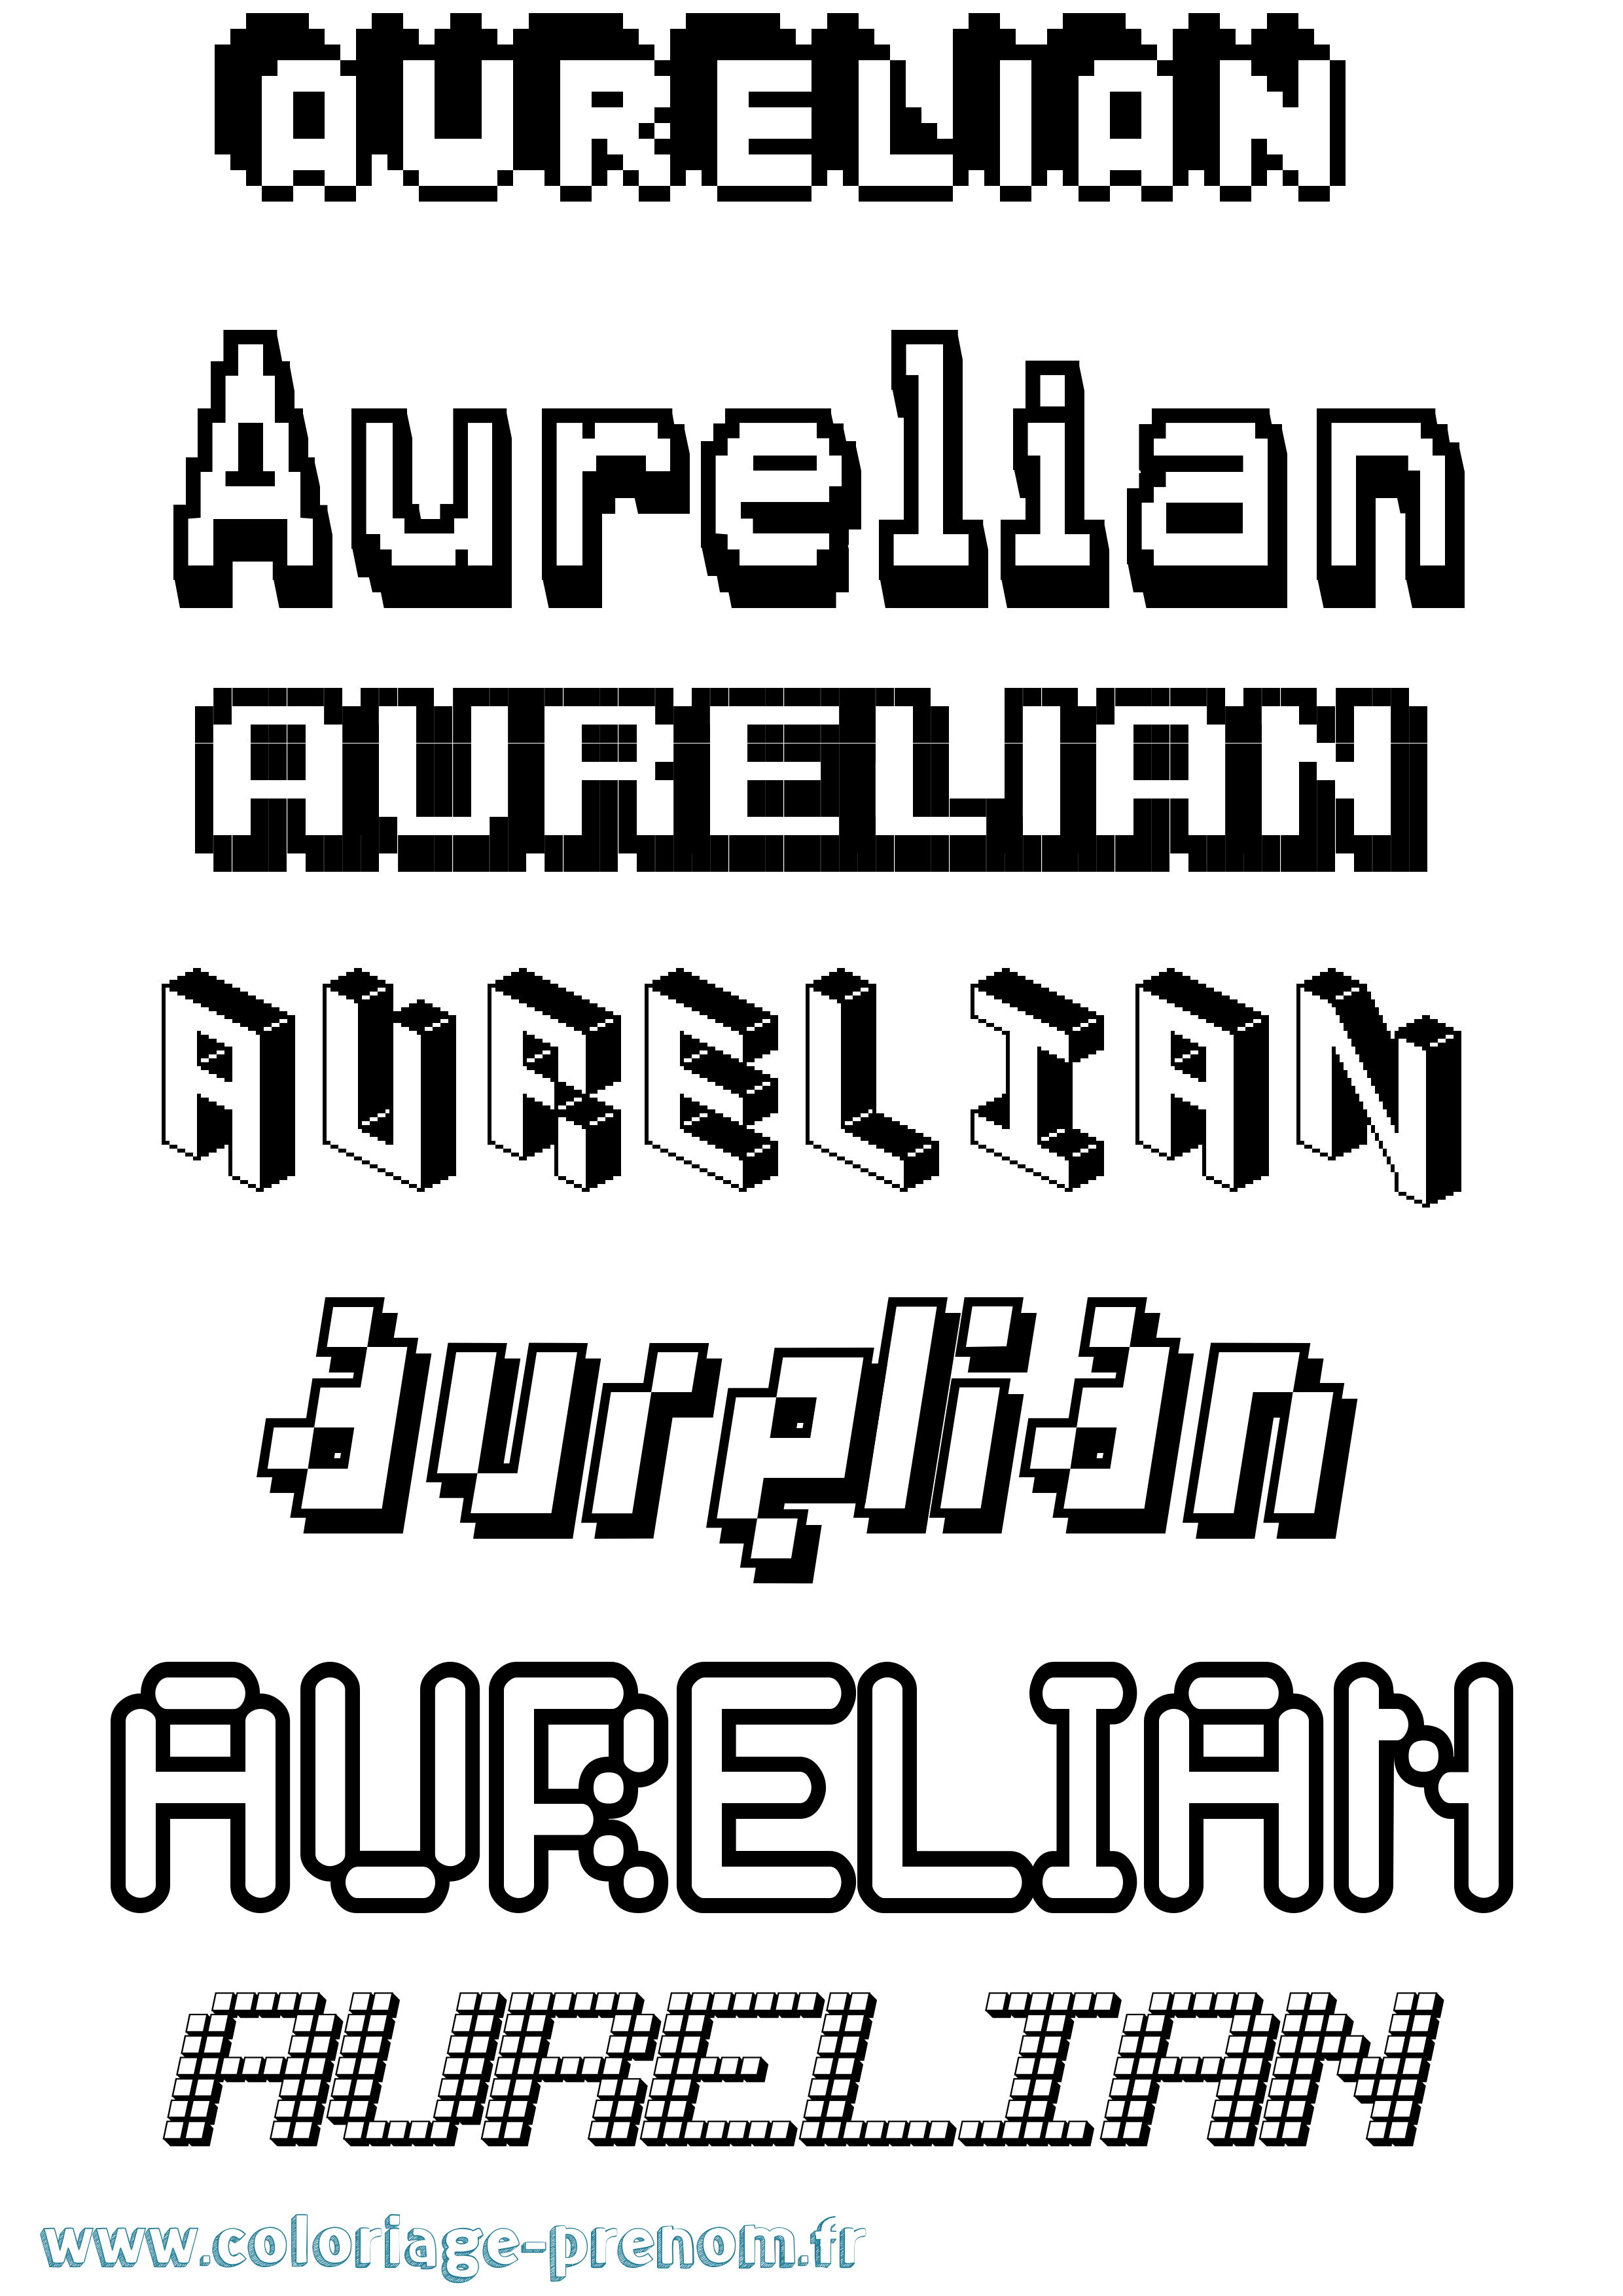 Coloriage prénom Aurelian Pixel